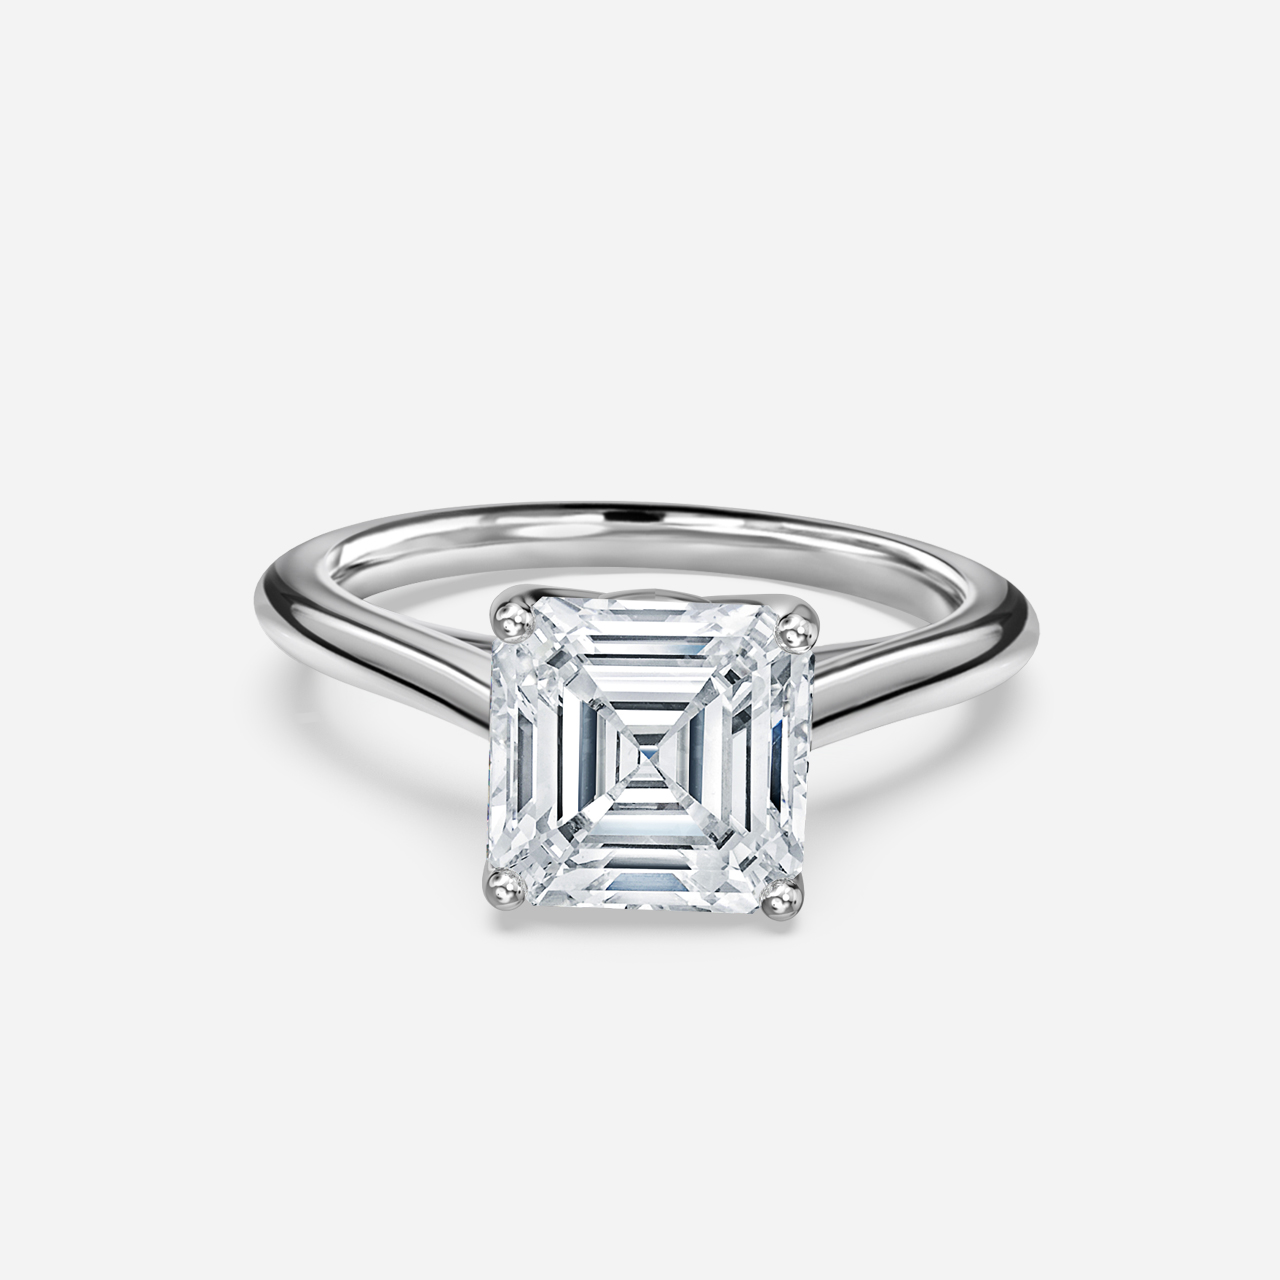 Aerin White Gold Unique Engagement Ring